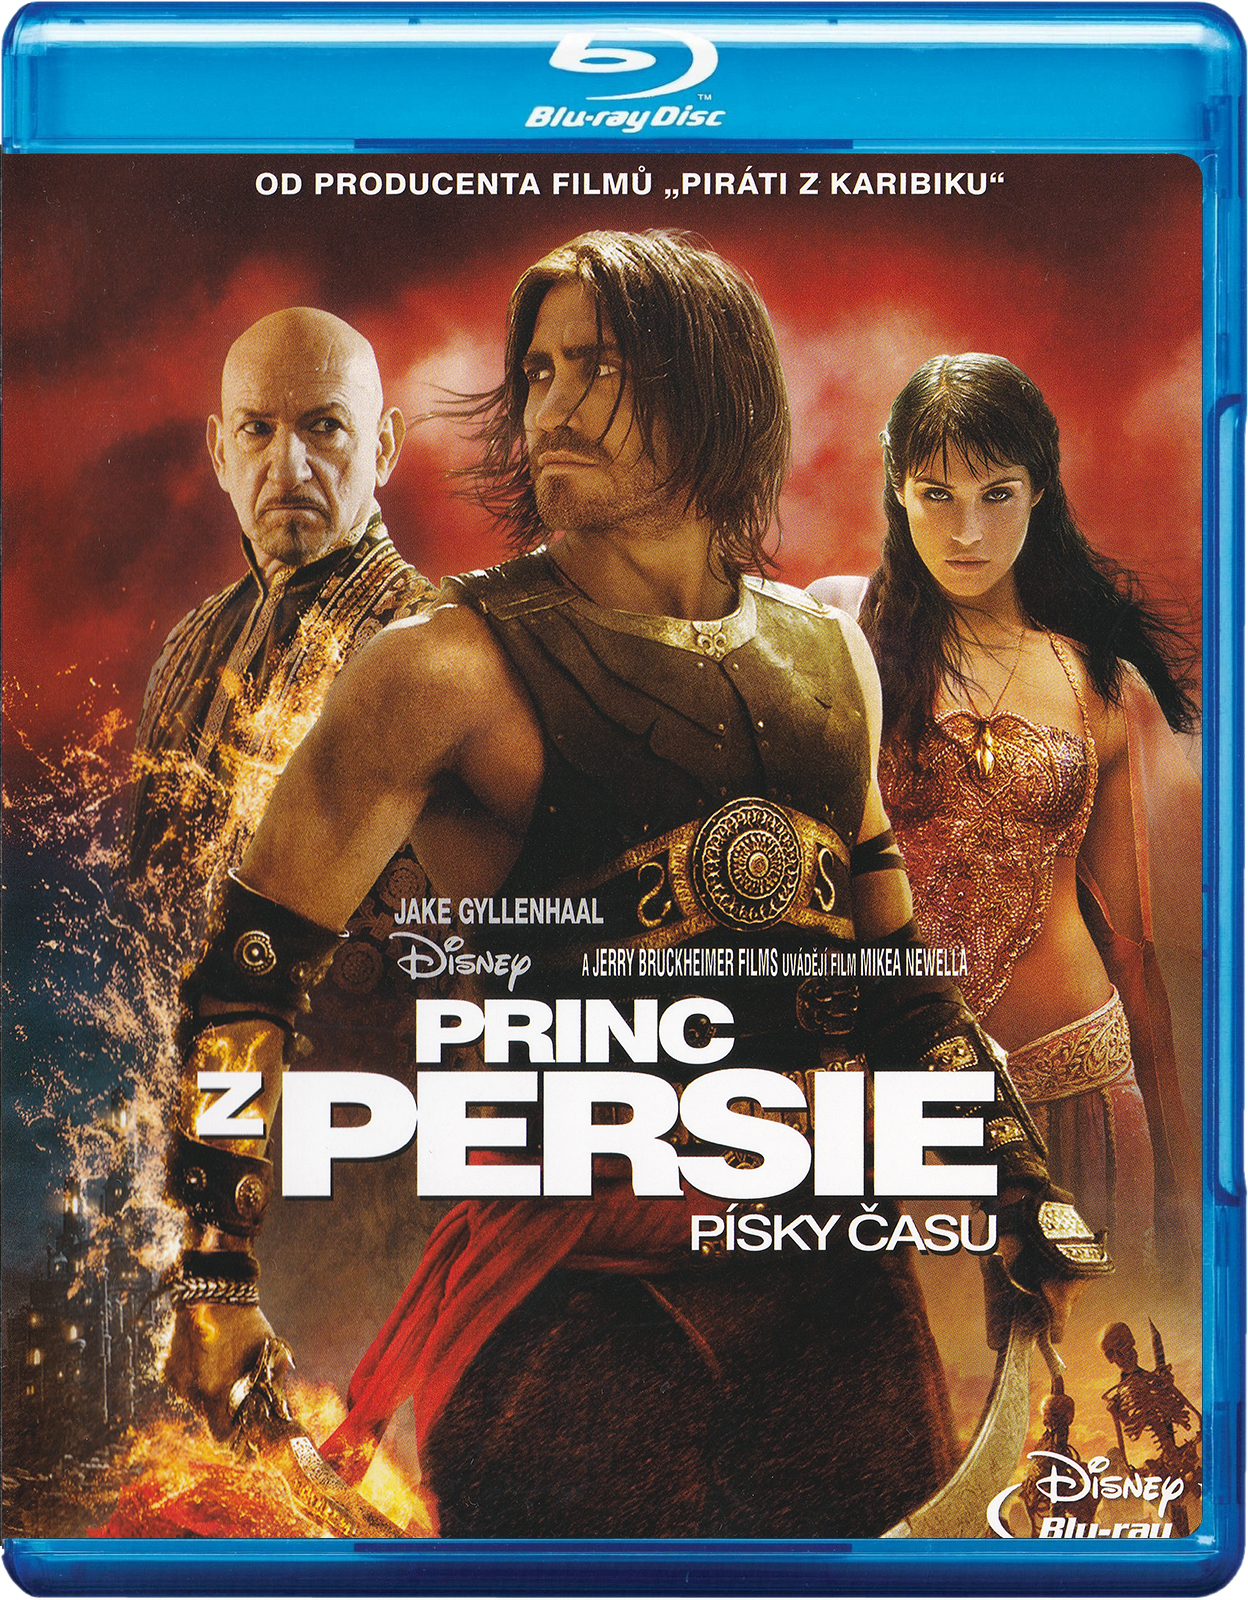 Stiahni si HD Filmy Princ z Persie: Pisky casu / Prince of Persia: The Sands of Time (2010)(CZ/EN)[720pHD] = CSFD 70%